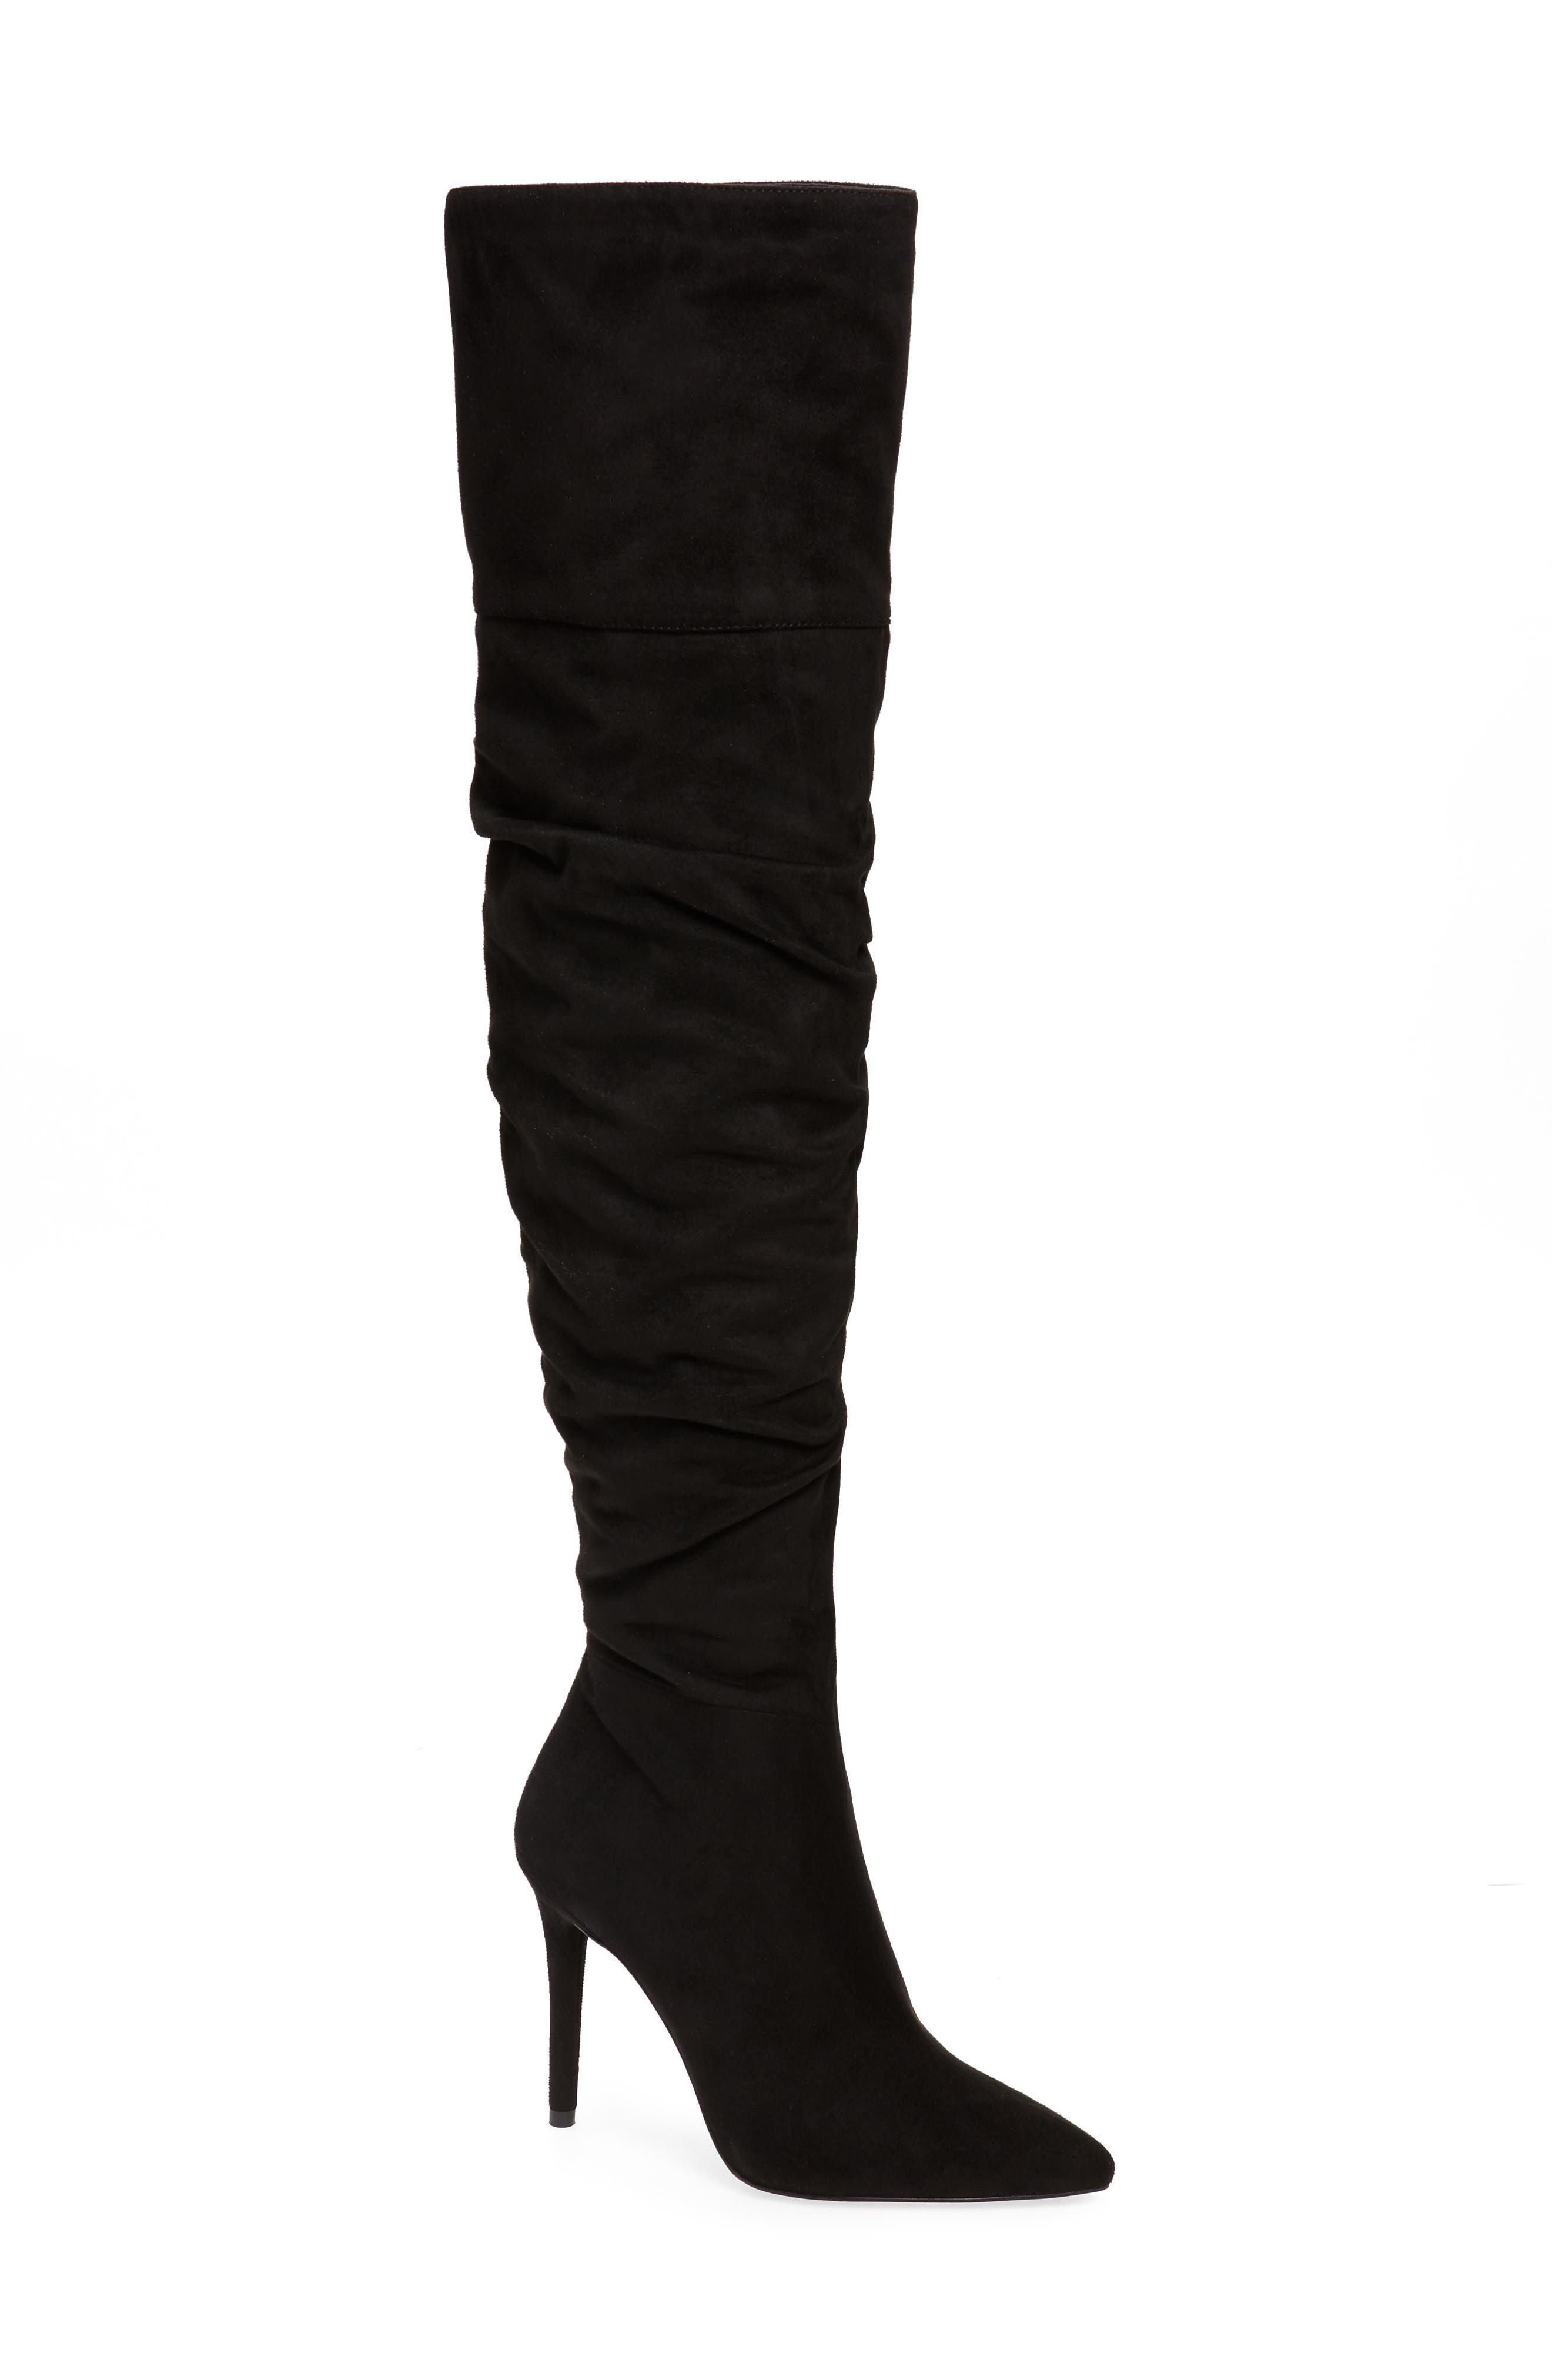 Sale: Women's Jessica Simpson Boots 